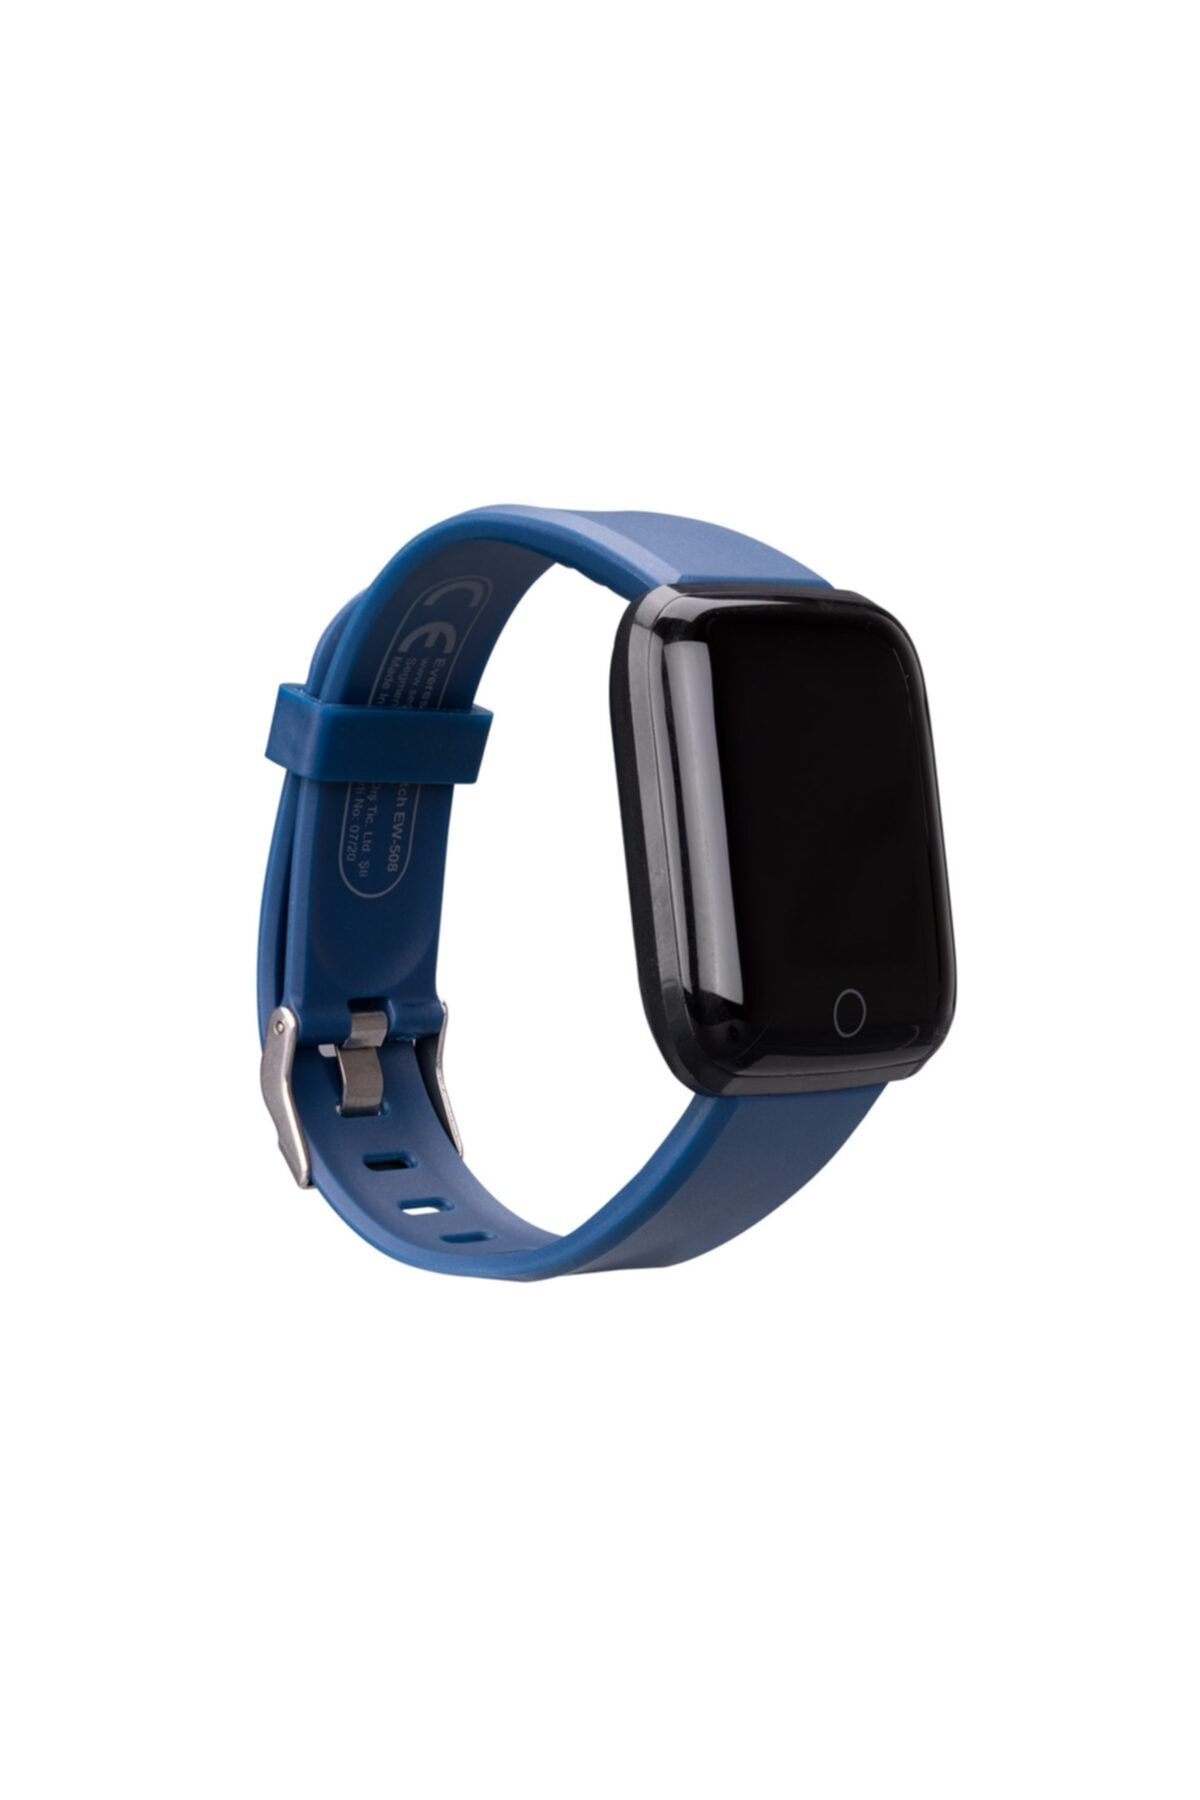 Everest Ever Watch Ew-508 Android/ıos Smart Watch Kalp Atışı Sensörlü Mavi Akıllı Saat